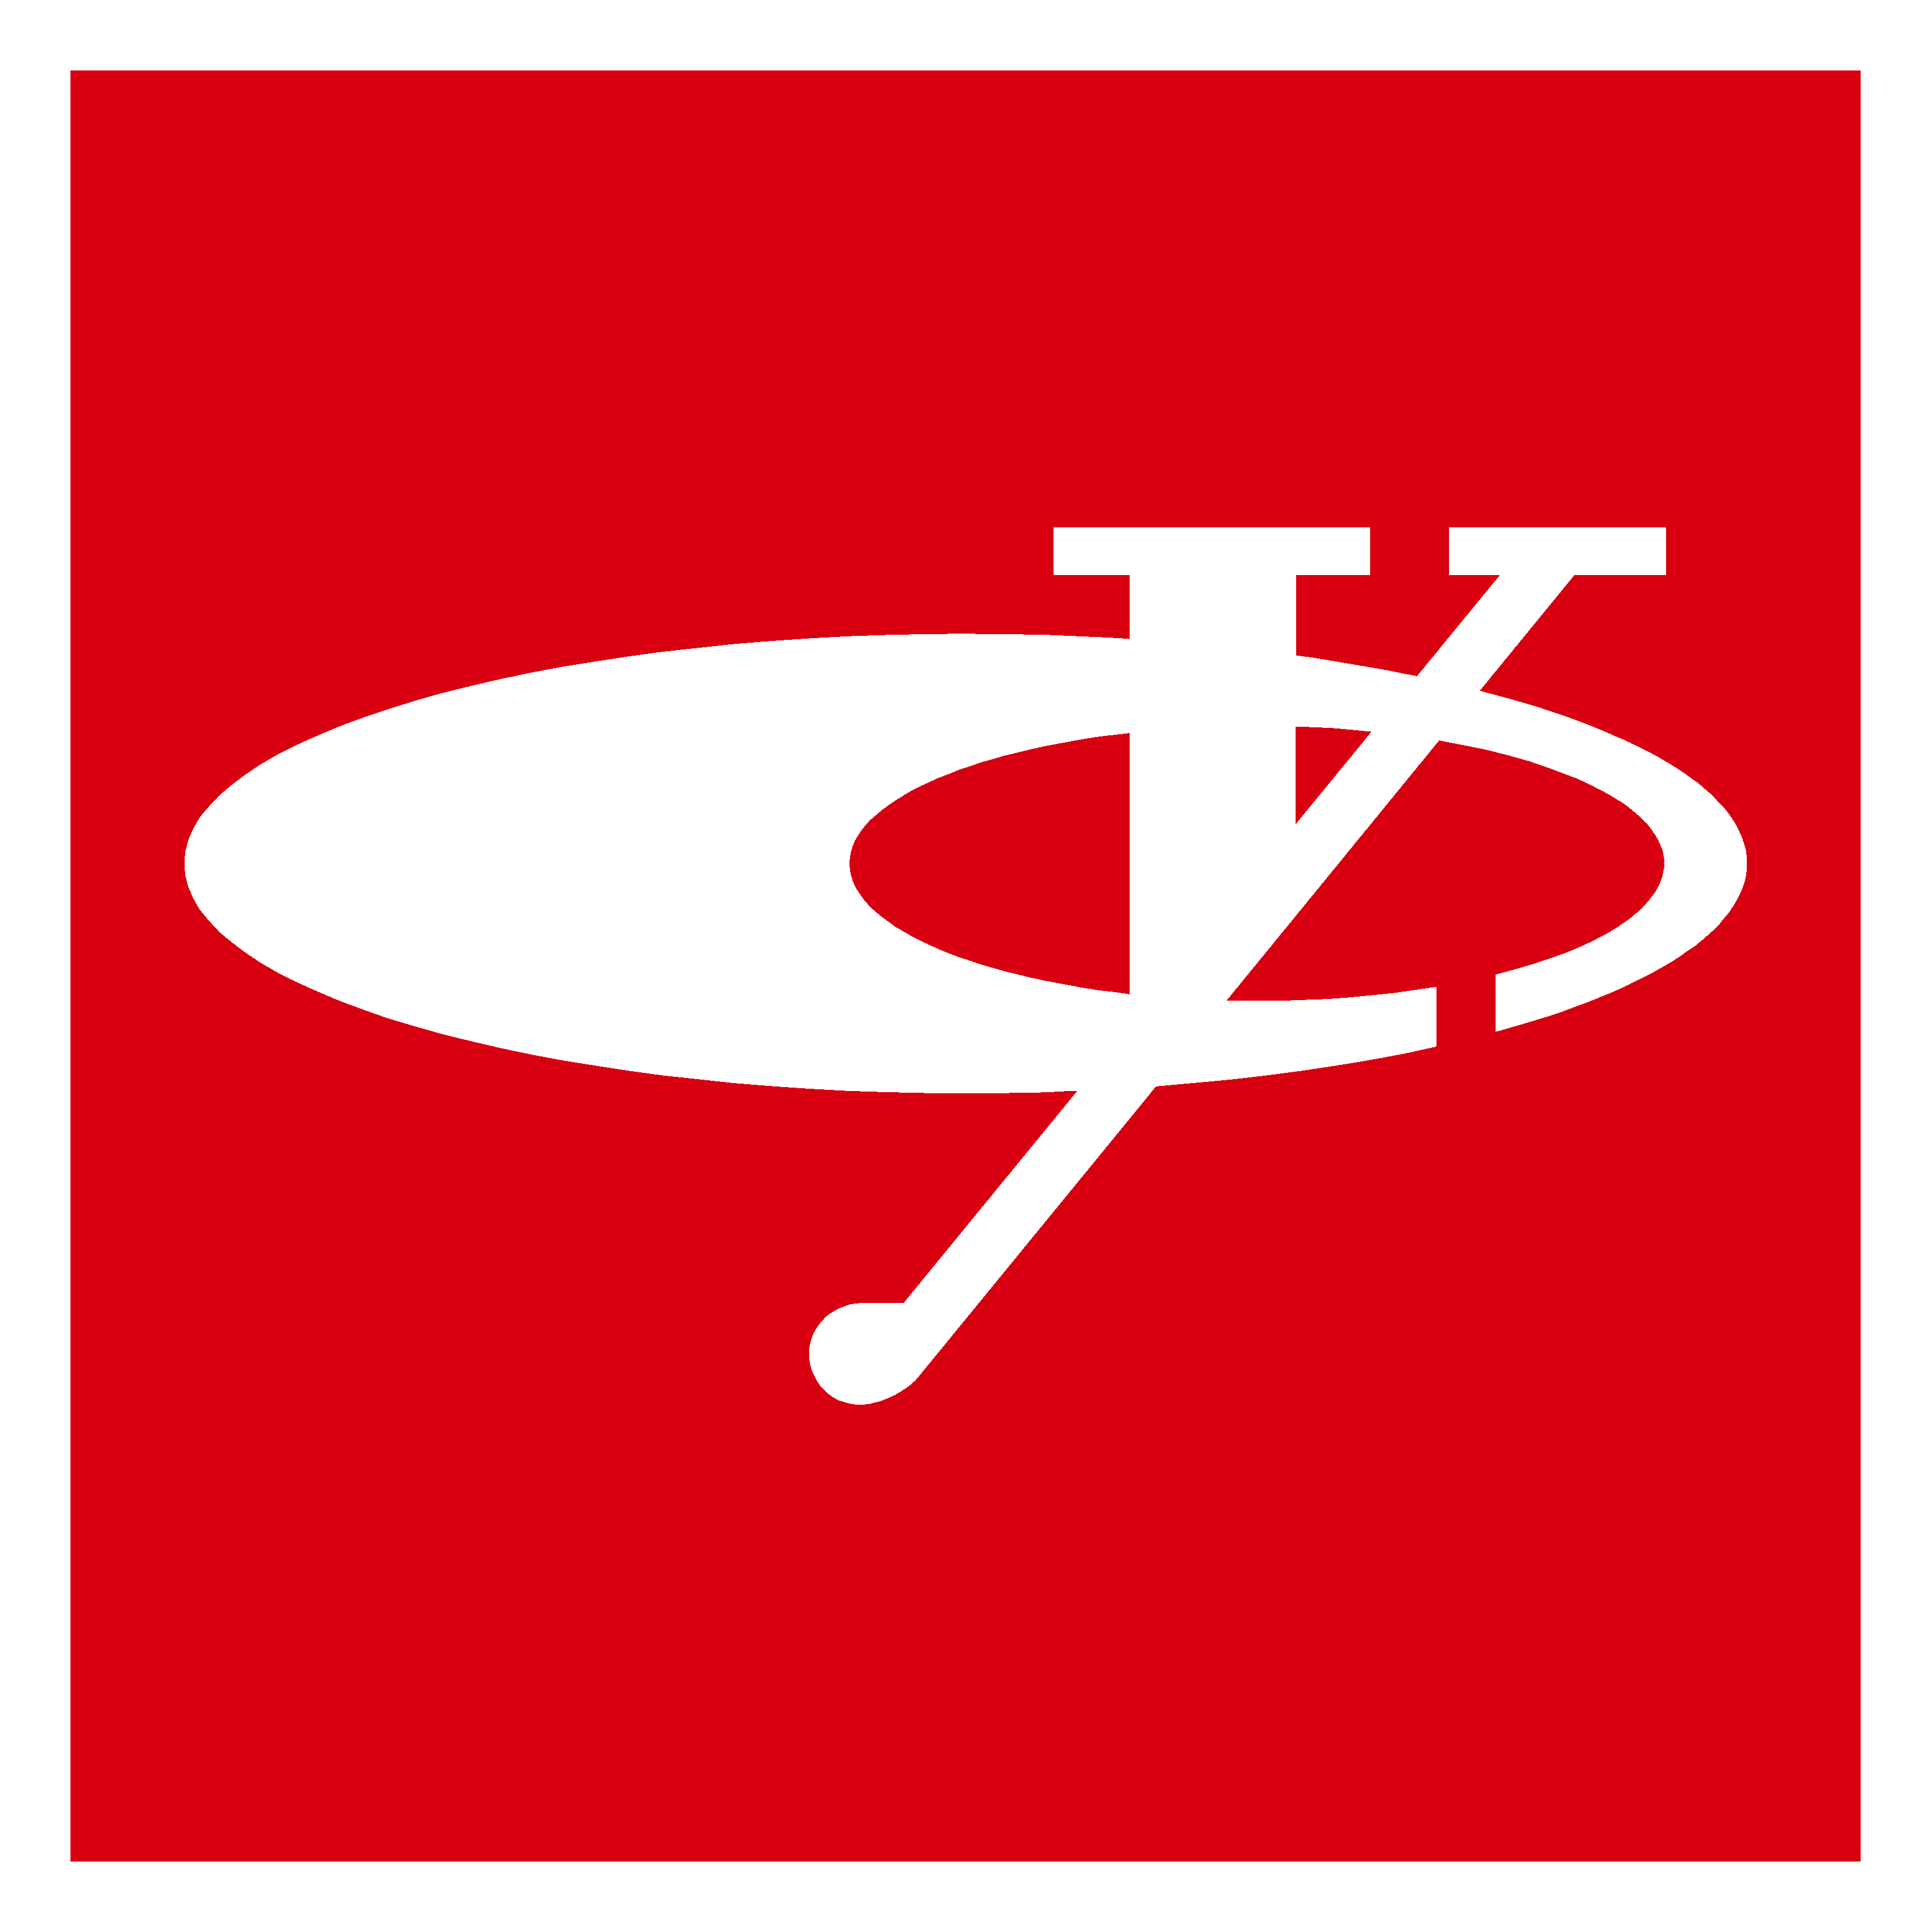 Yuchai logo, logotype